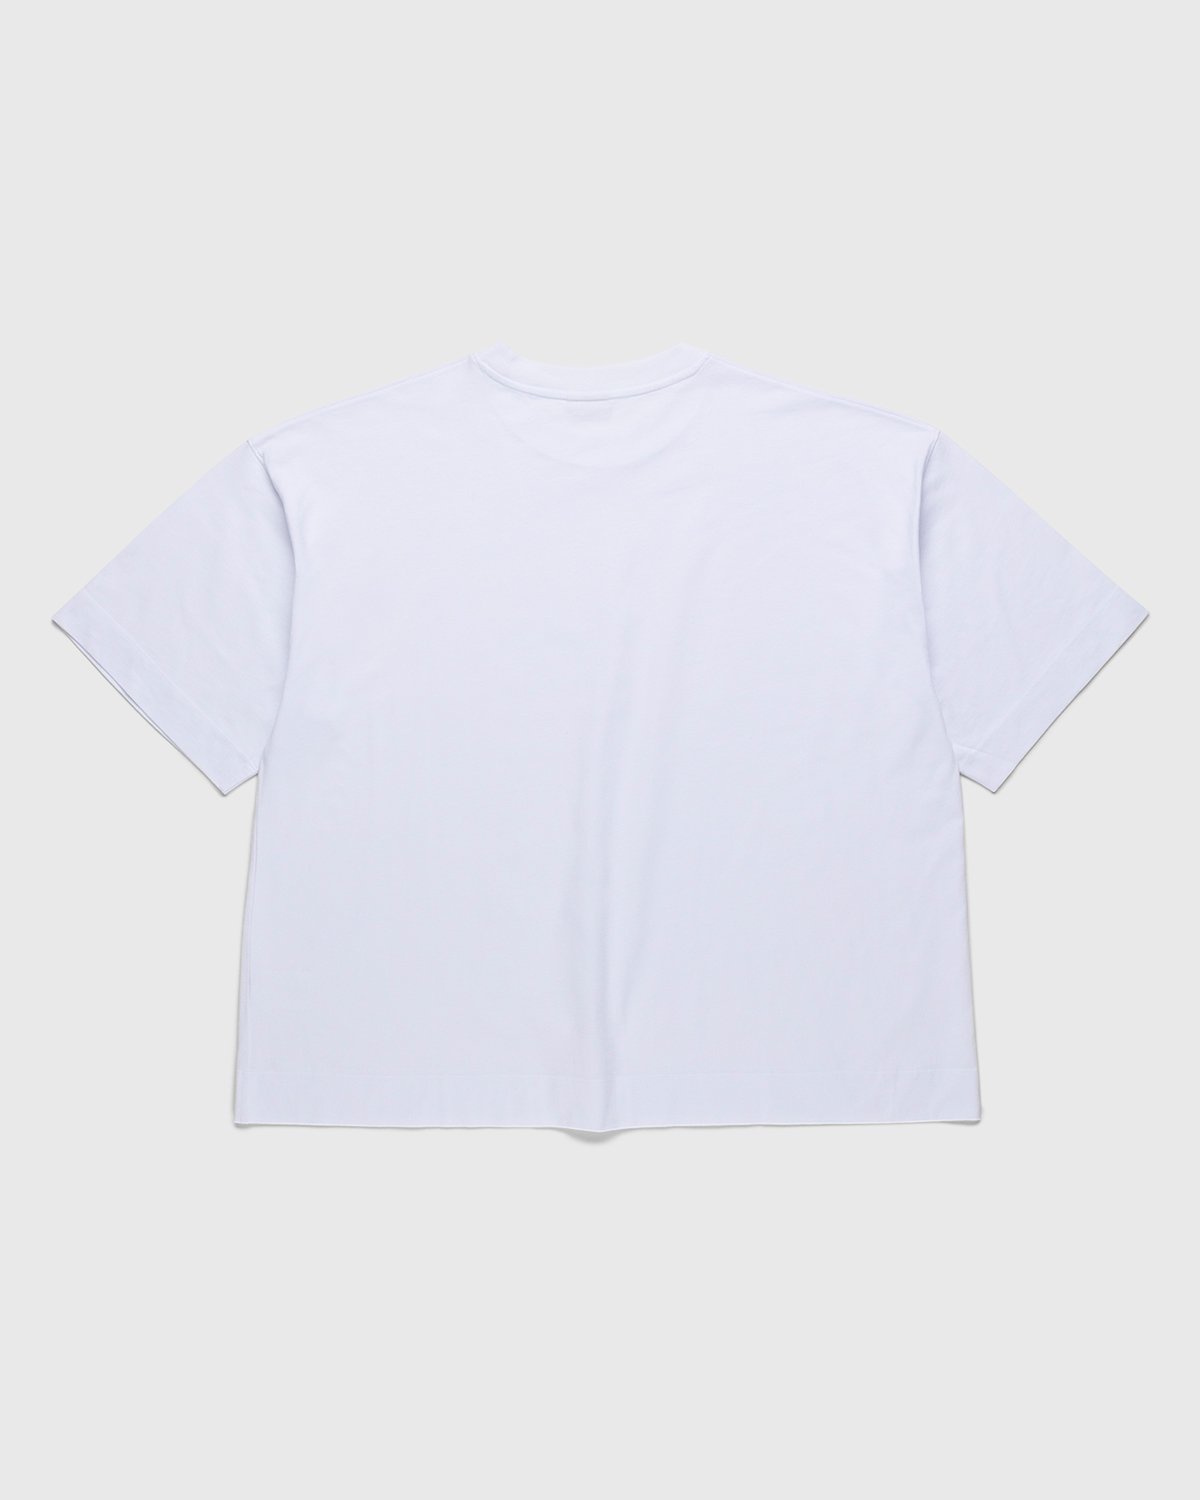 Dries van Noten - Hen Oversized T-Shirt White - Clothing - White - Image 1